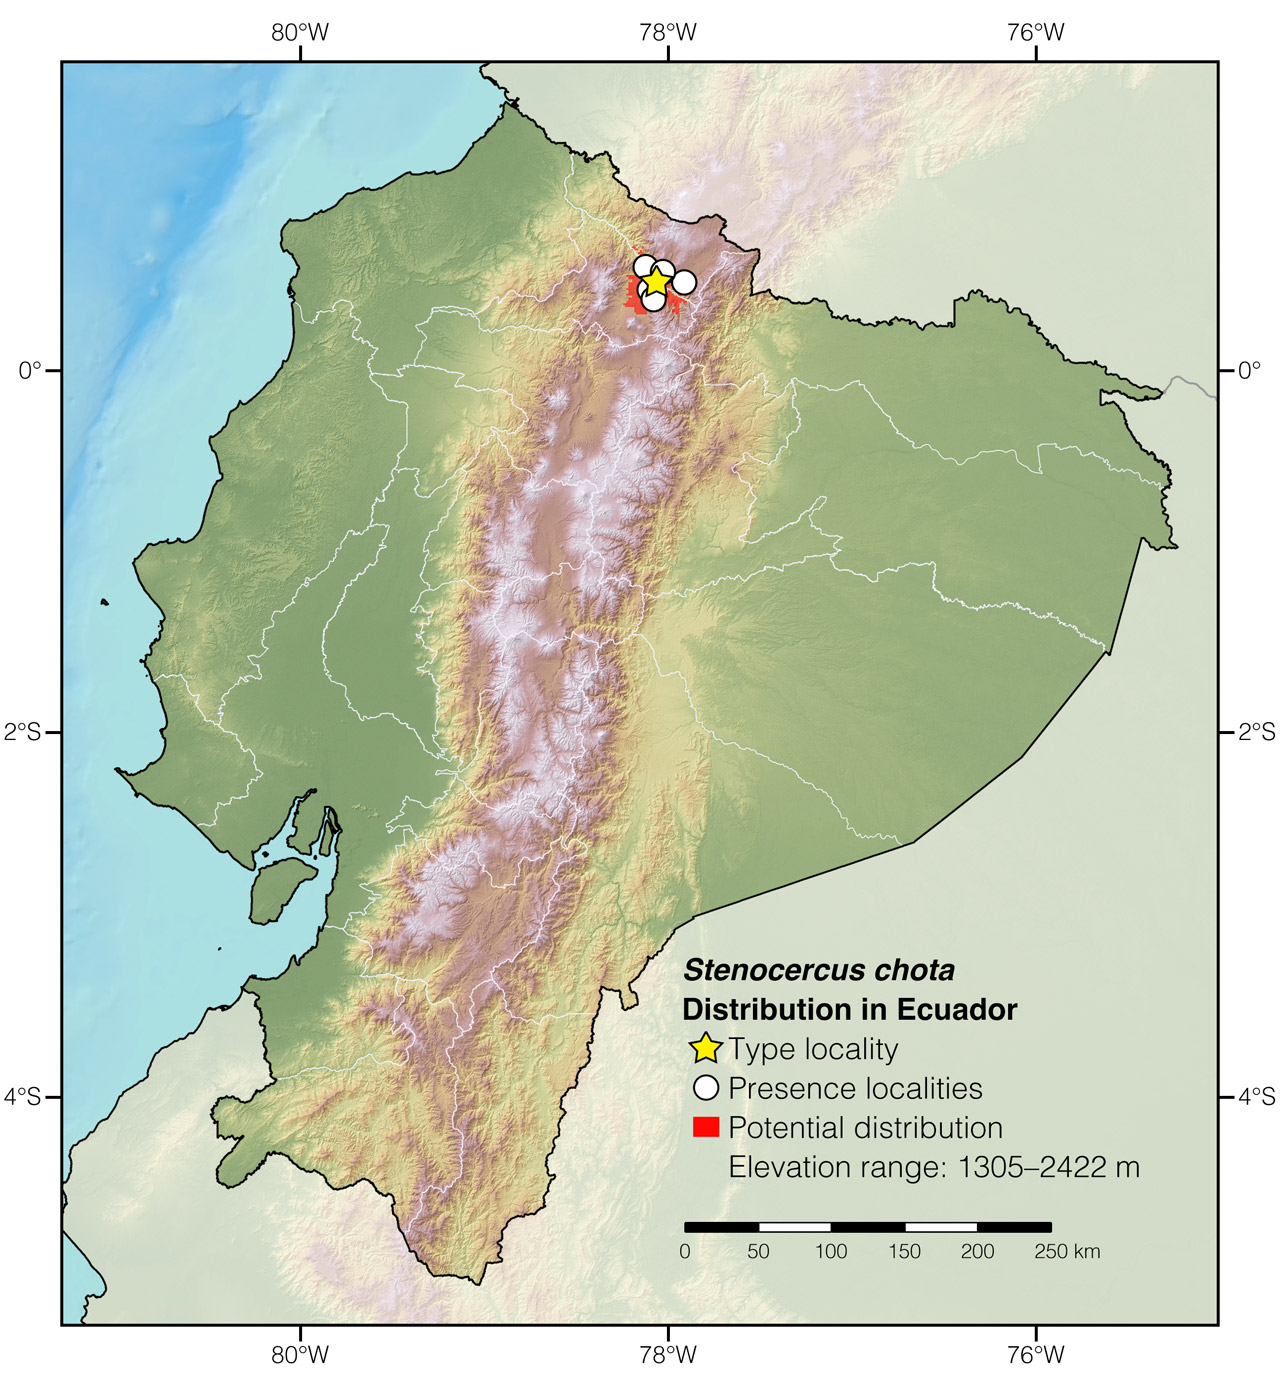 Distribution of Stenocercus chota in Ecuador